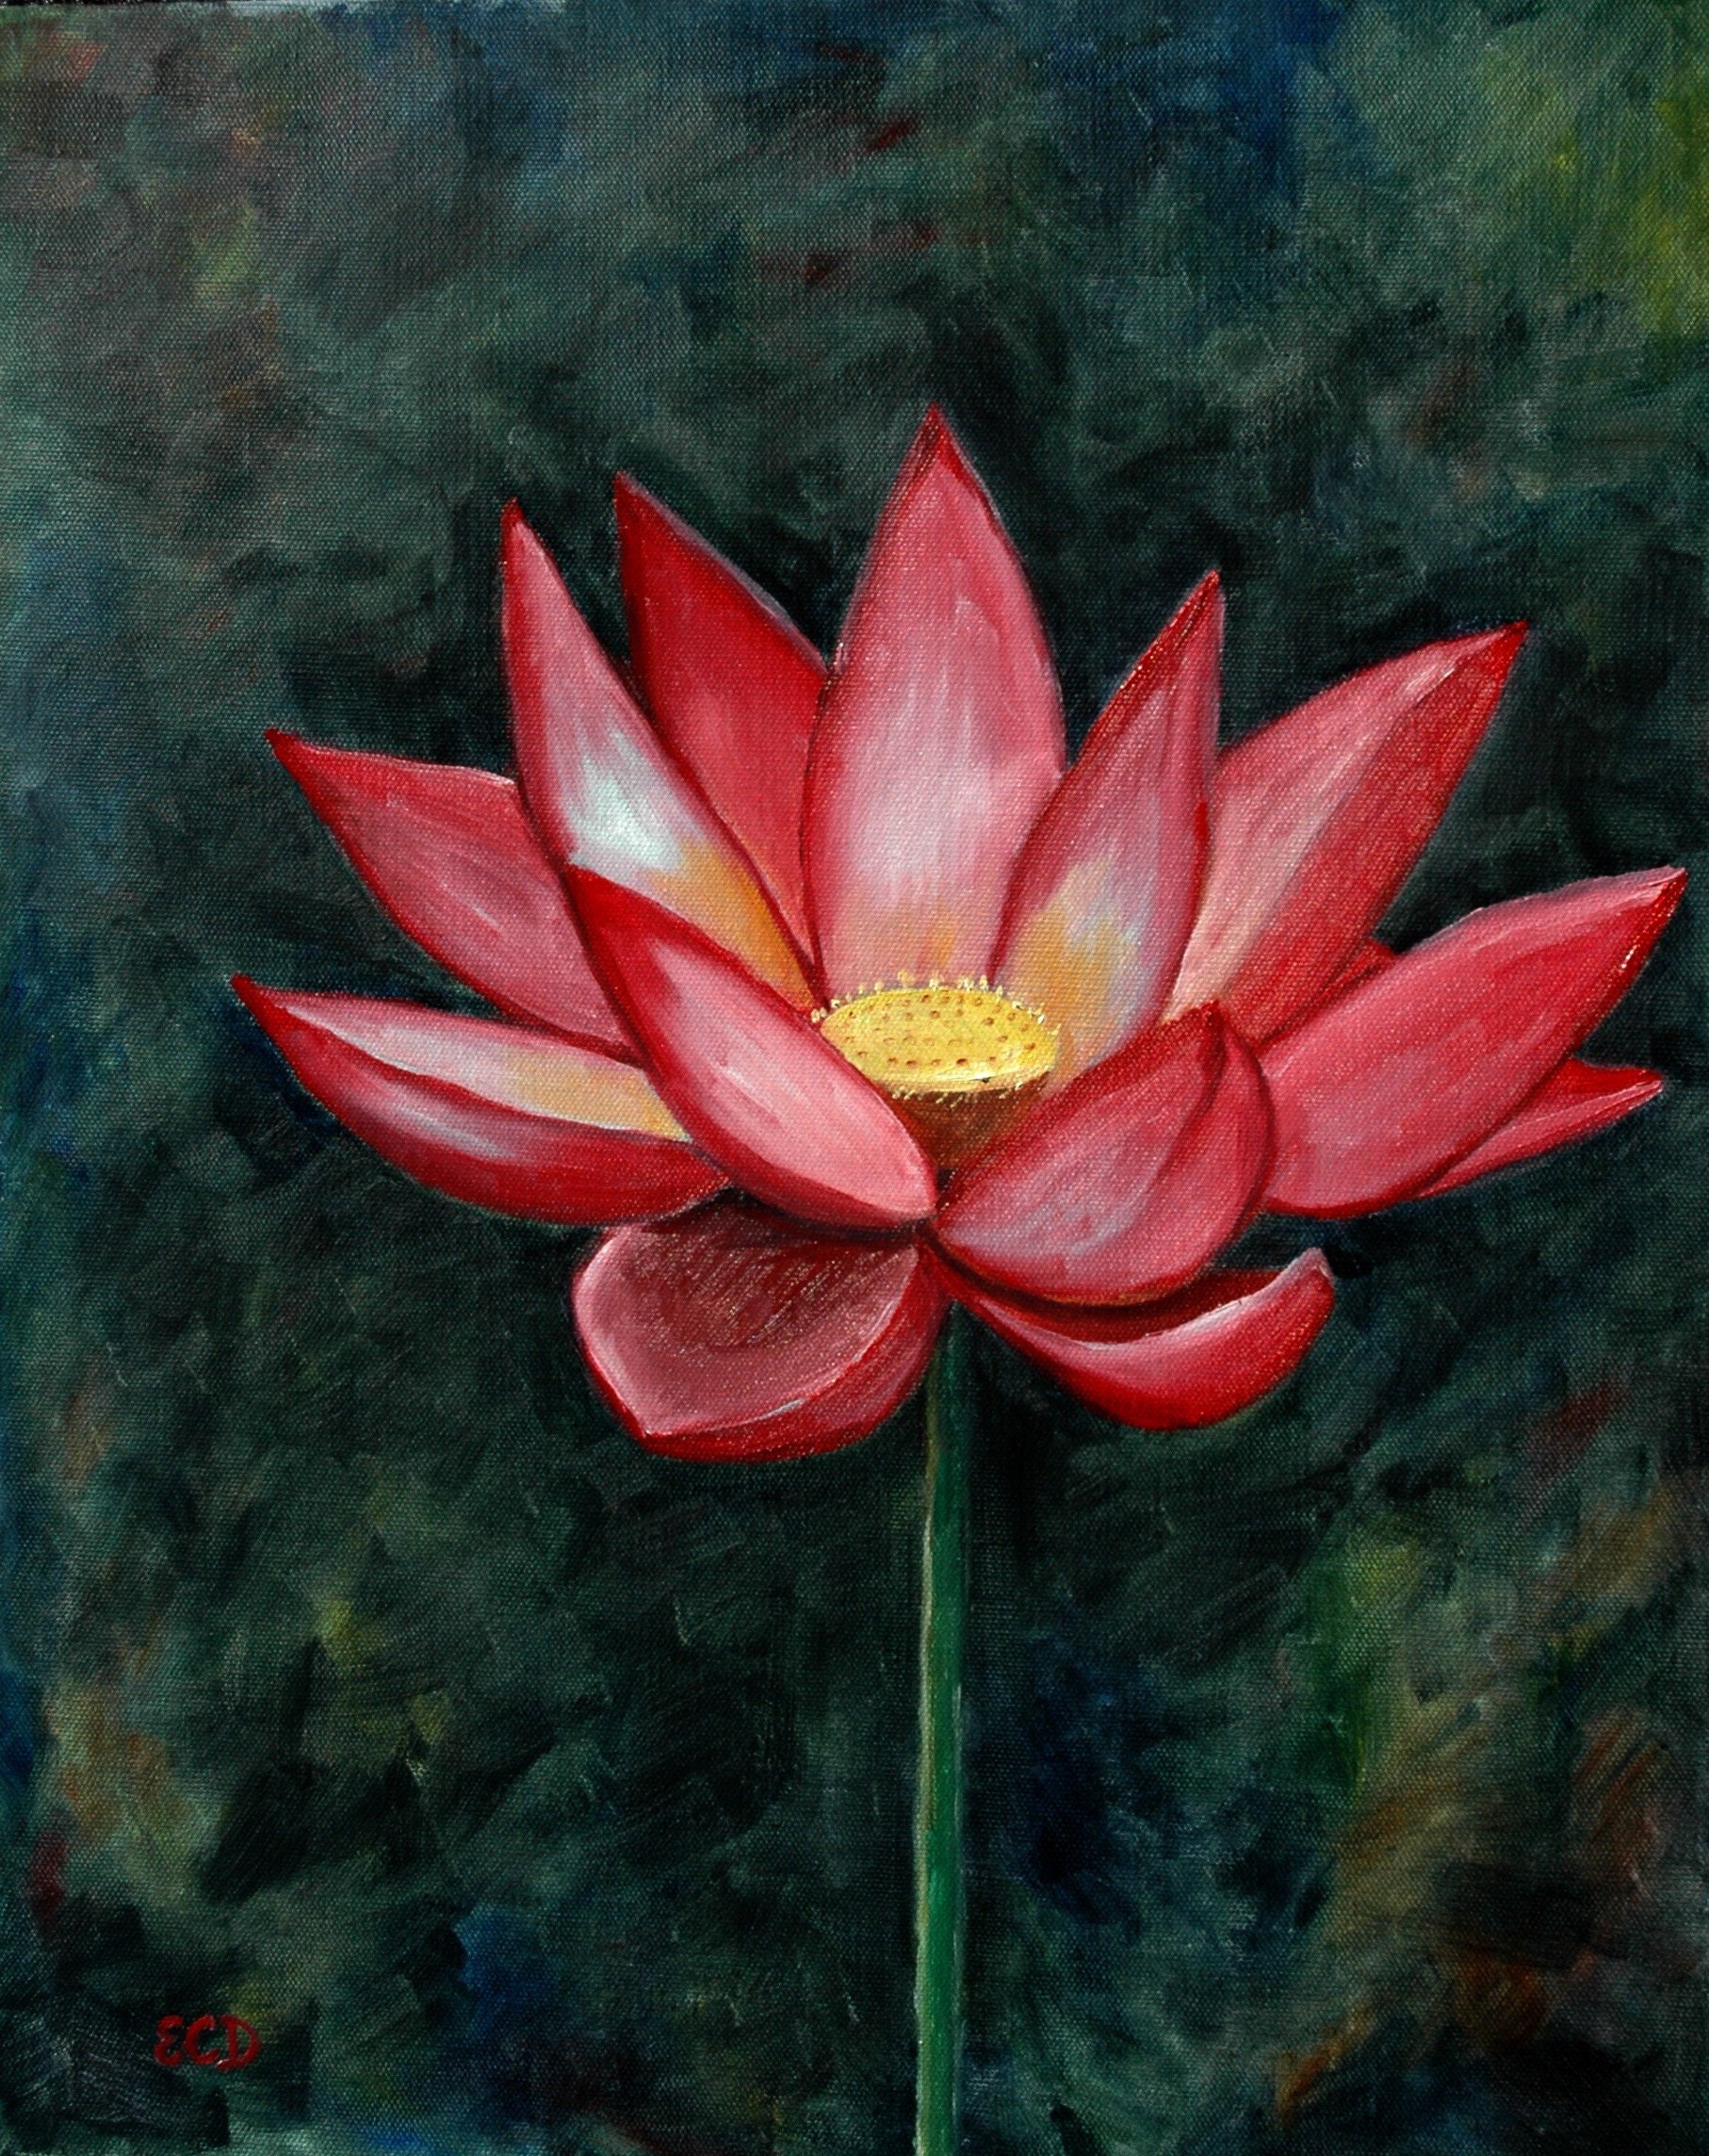 Red lotus flower benefits